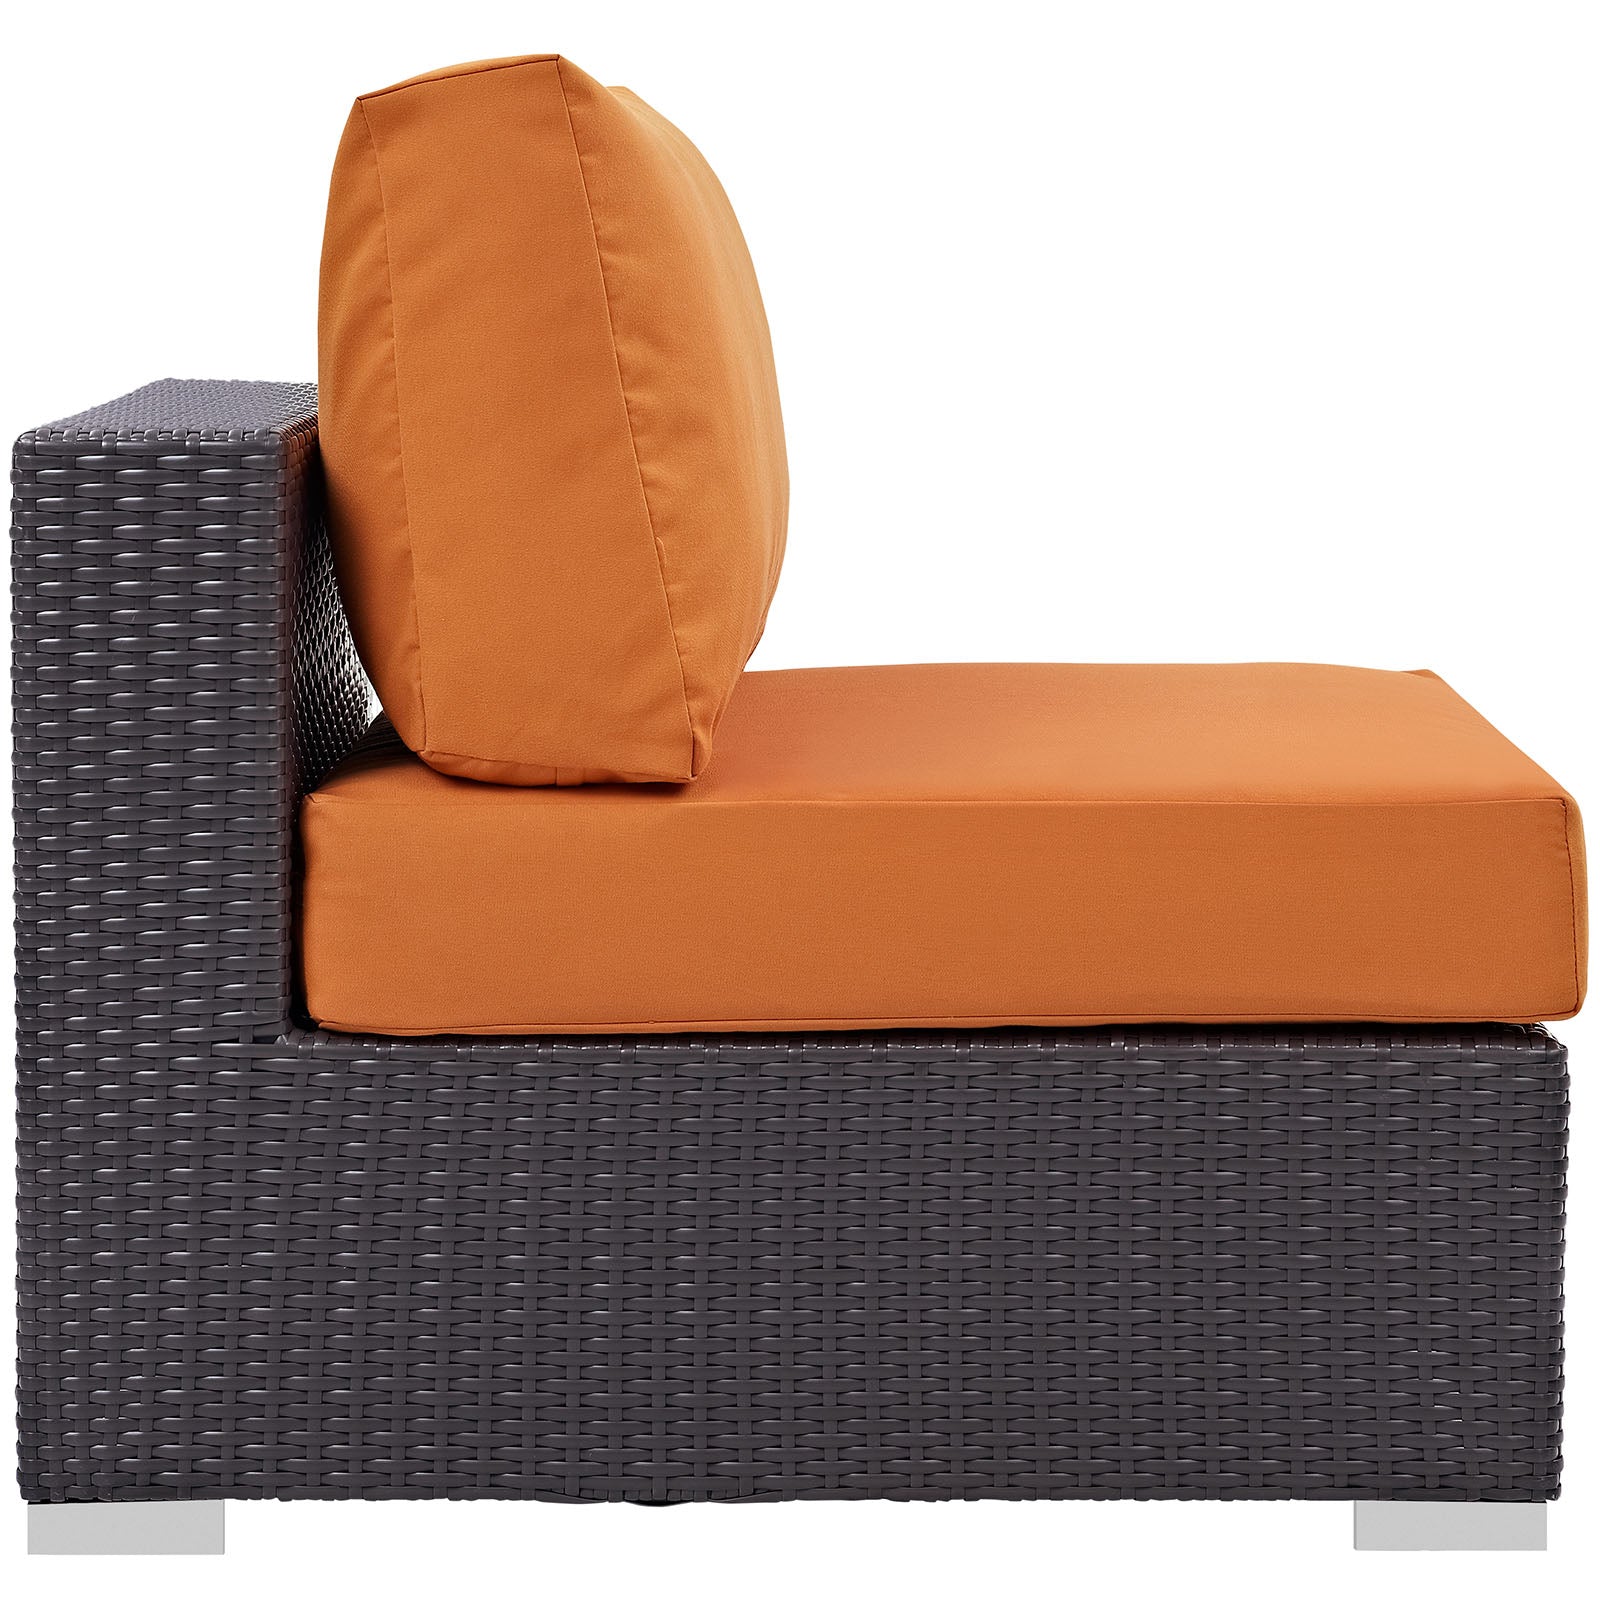 Modway Outdoor Chairs - Convene Outdoor Patio Armless Chair Espresso & Orange